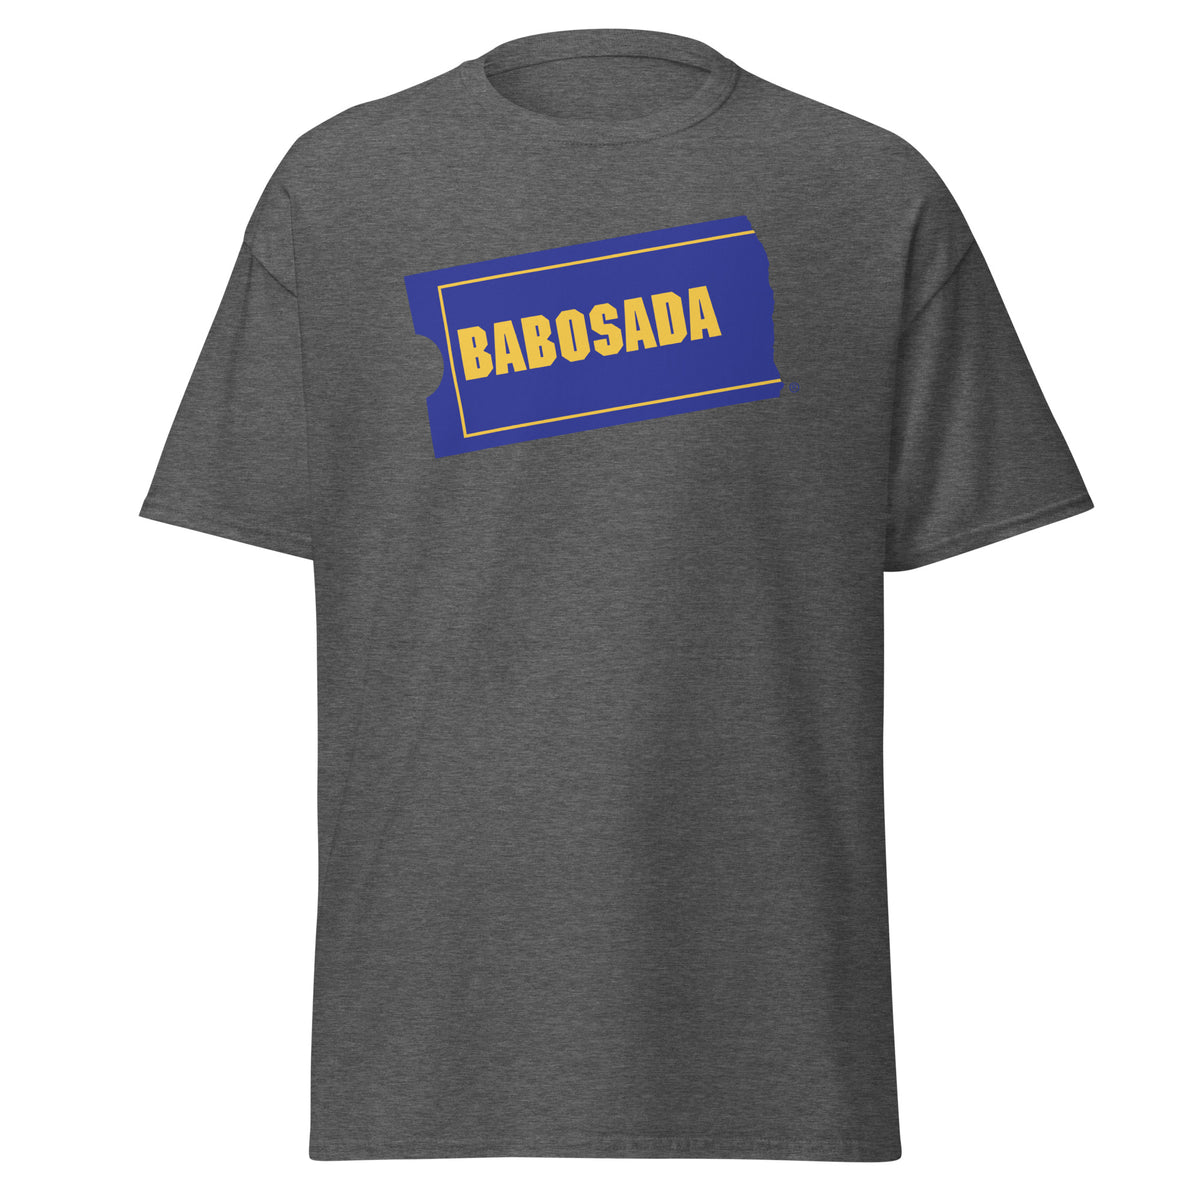 BABOSADA T-Shirt (Nonesense)